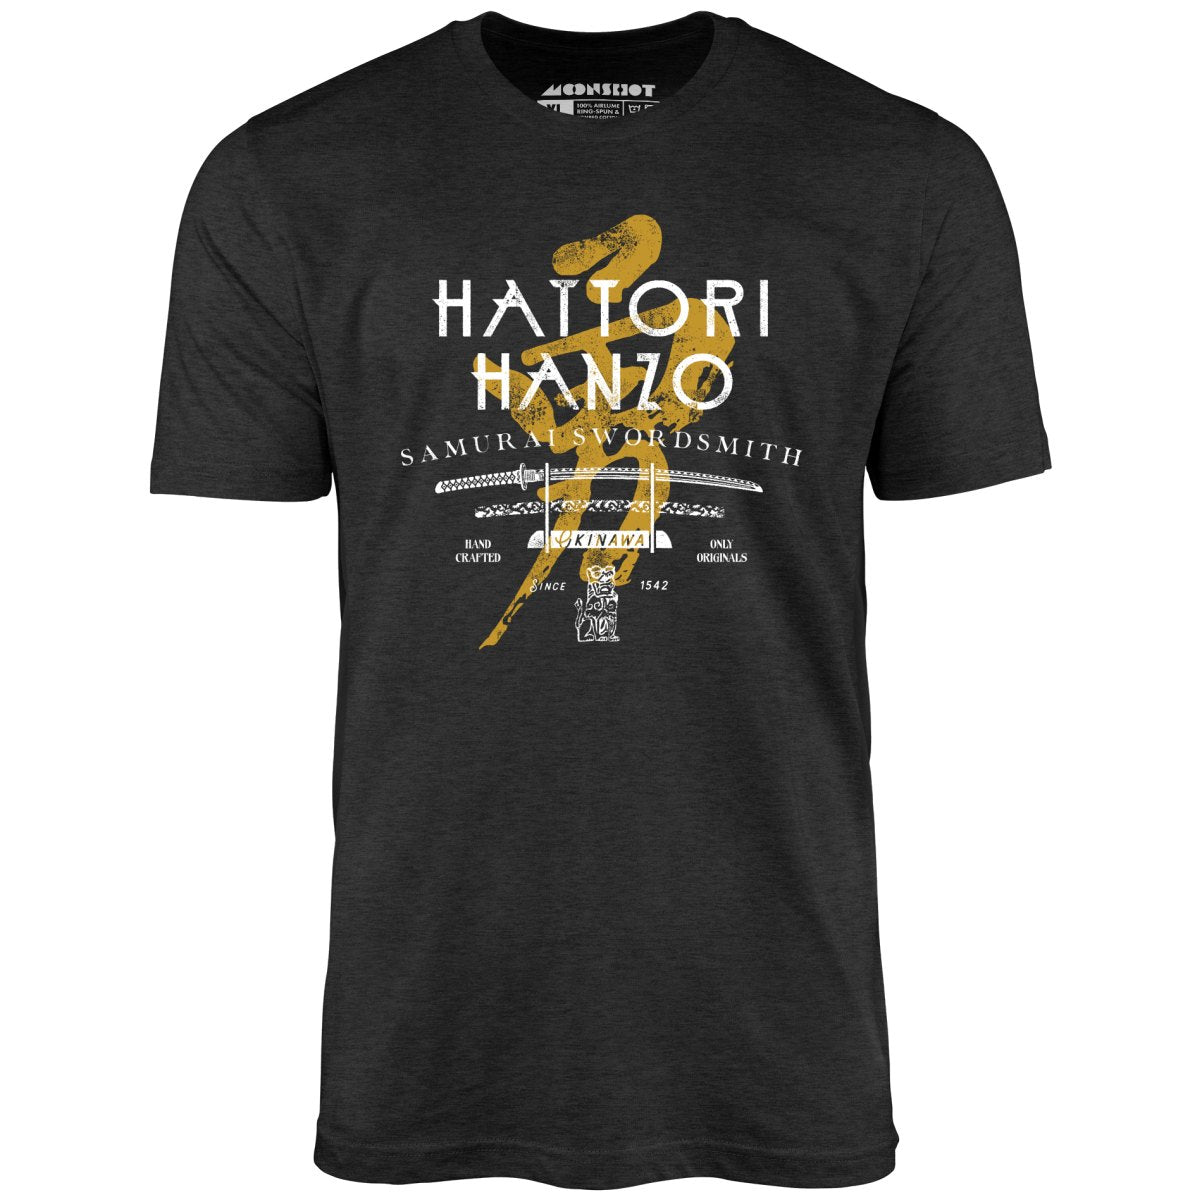 Hattori Hanzo Samurai Swordsmith - Unisex T-Shirt